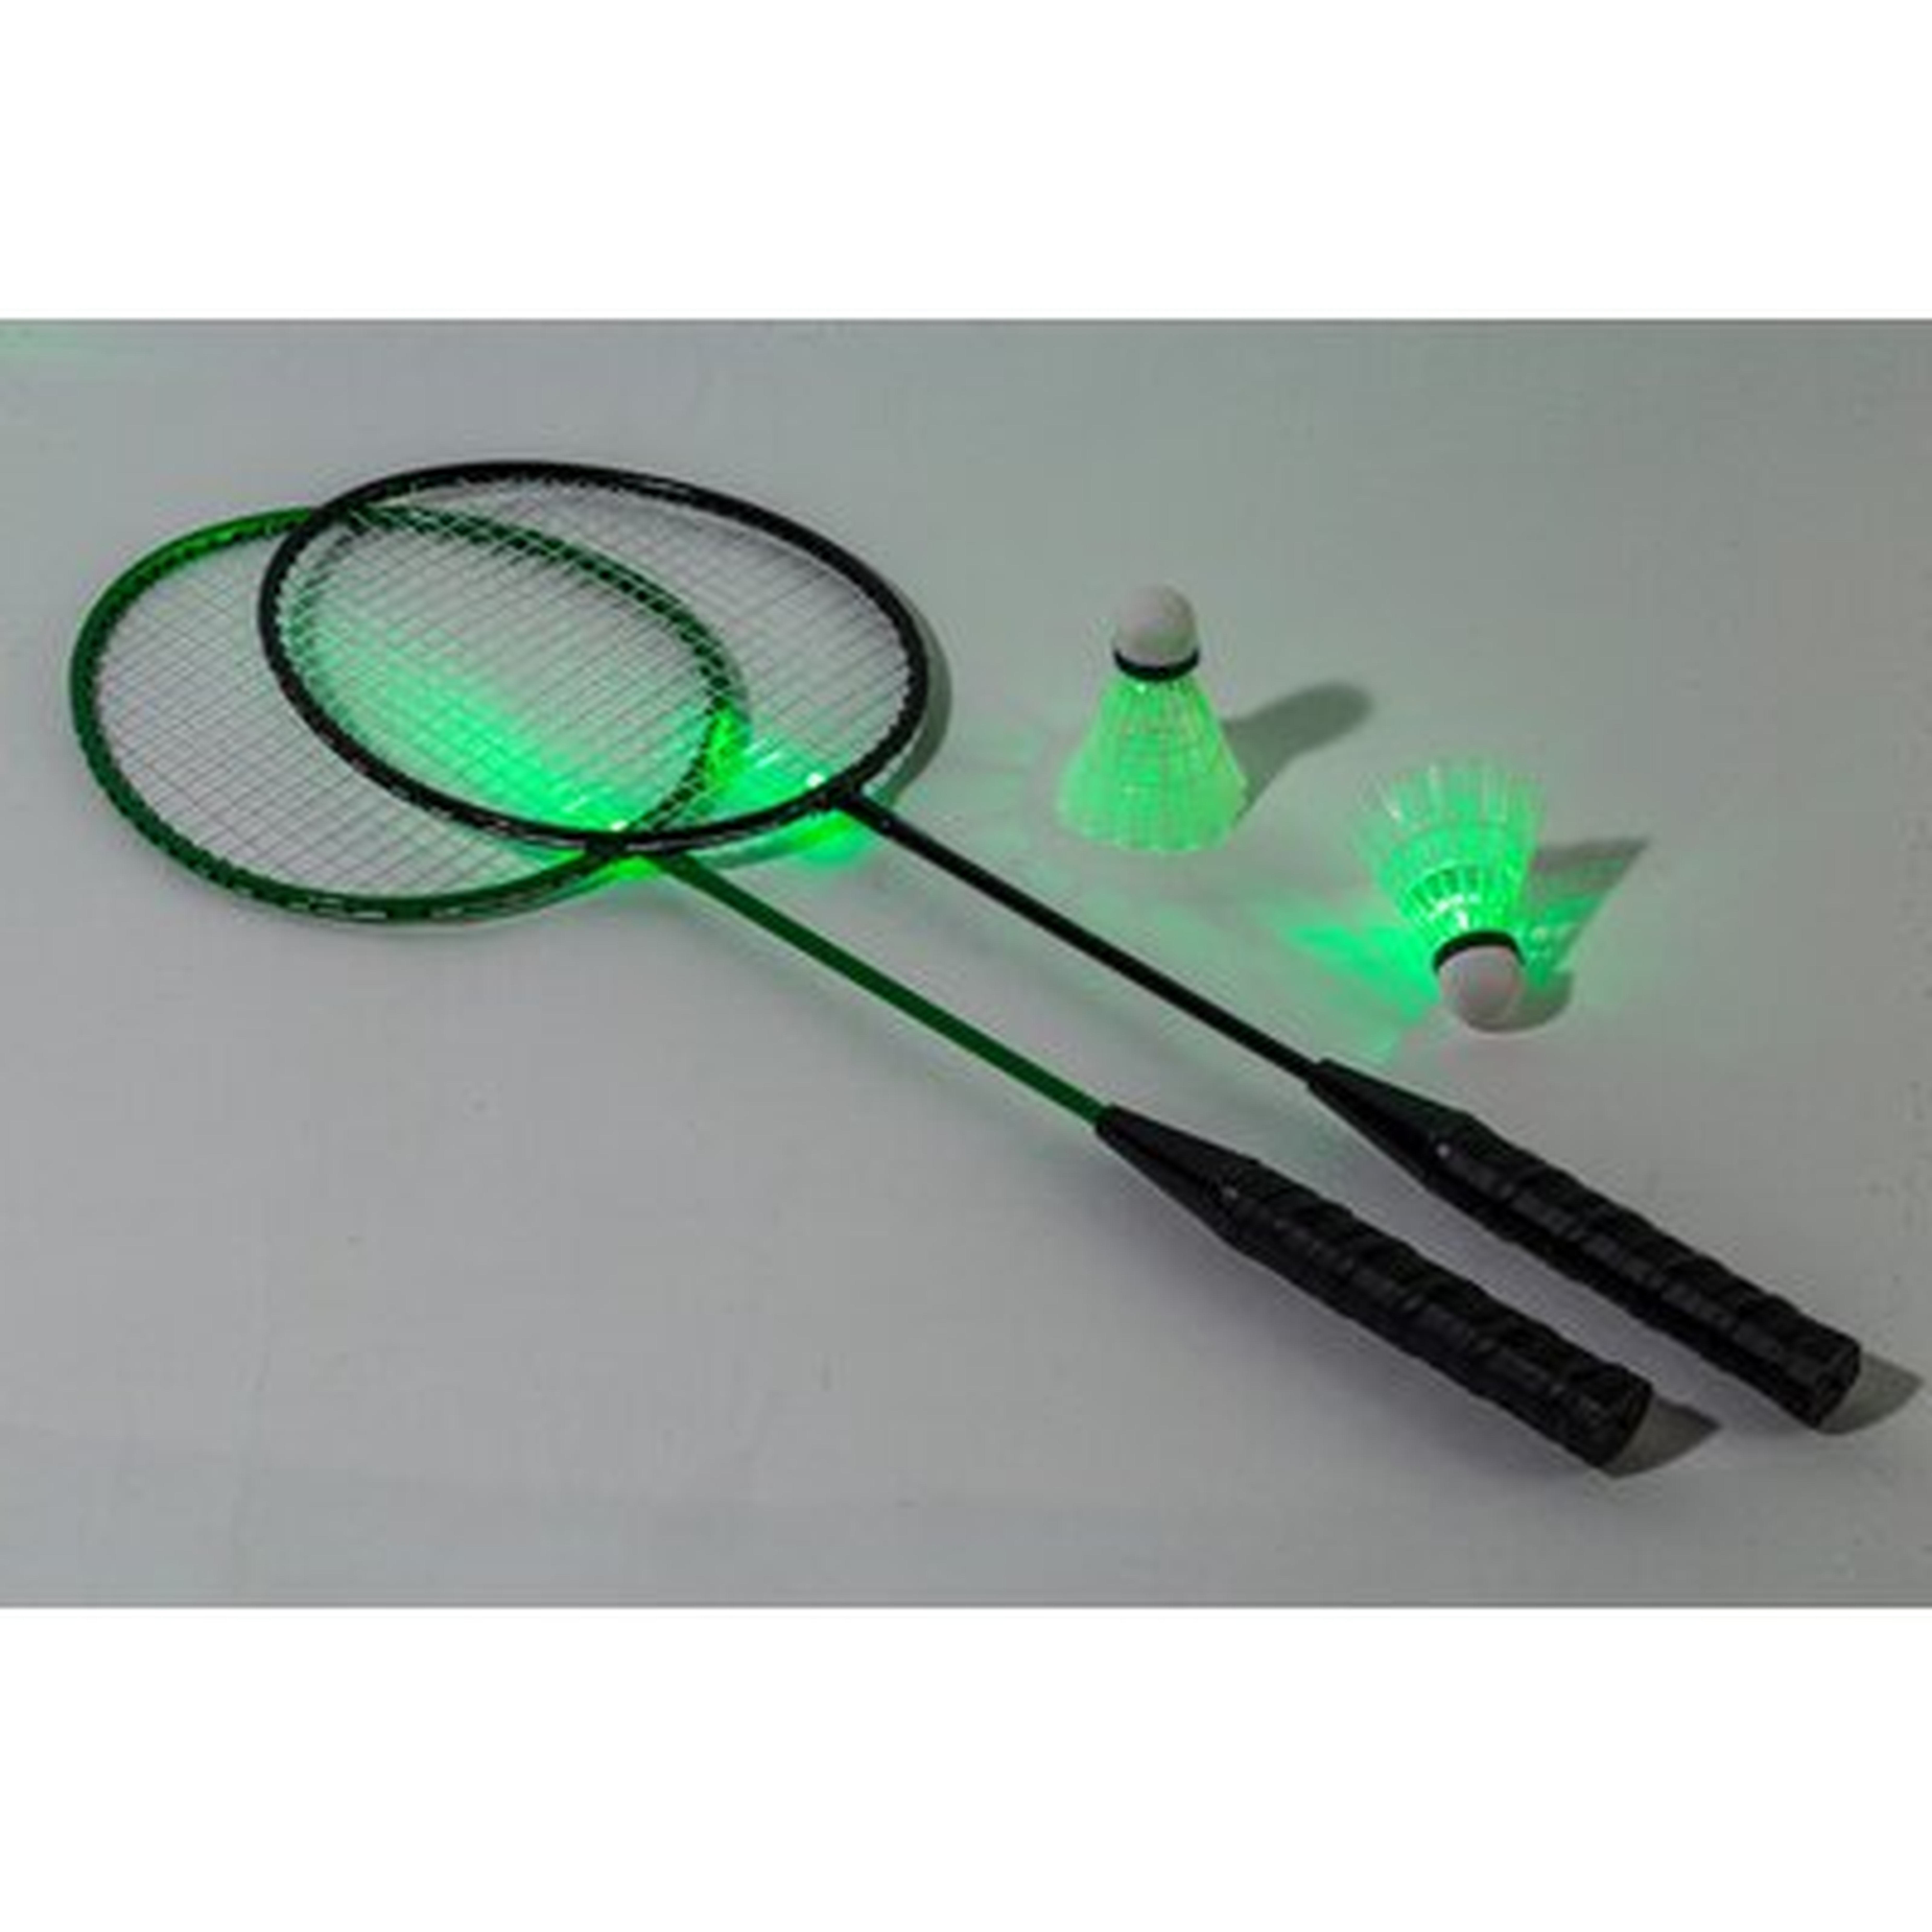 2 Player Badminton LED Racket - Wayfair